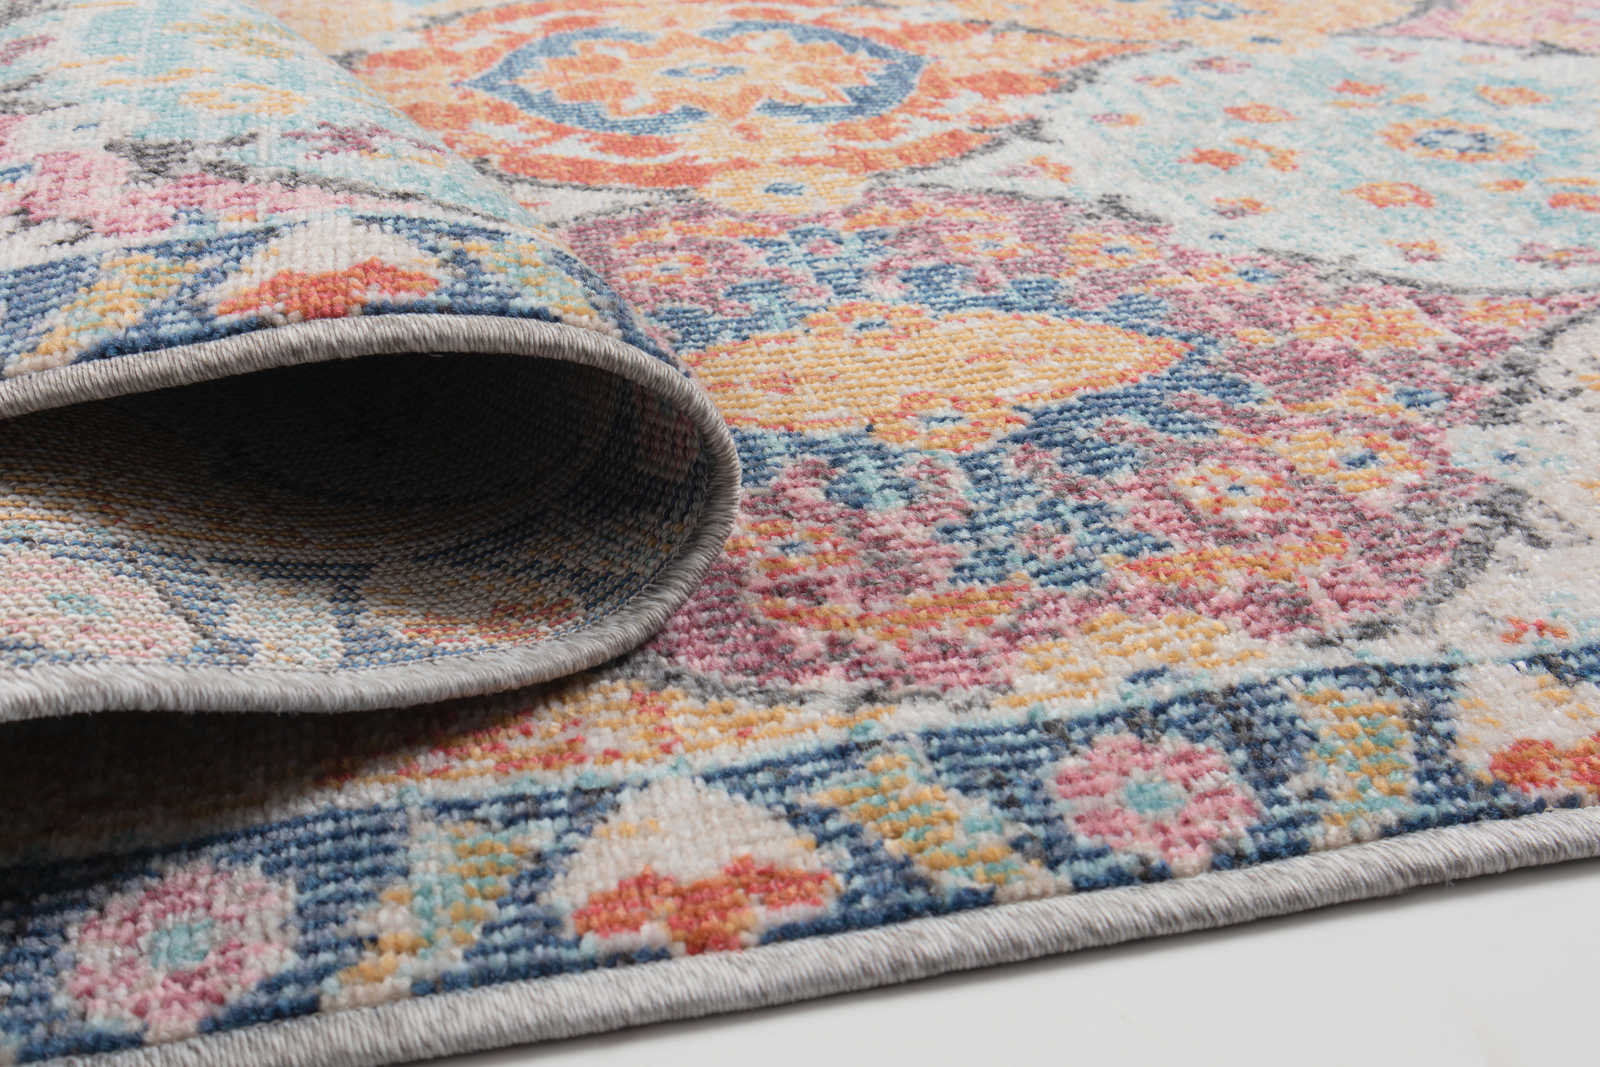             Bunter Outdoor Teppich aus Flachgewebe – 170 x 120 cm
        